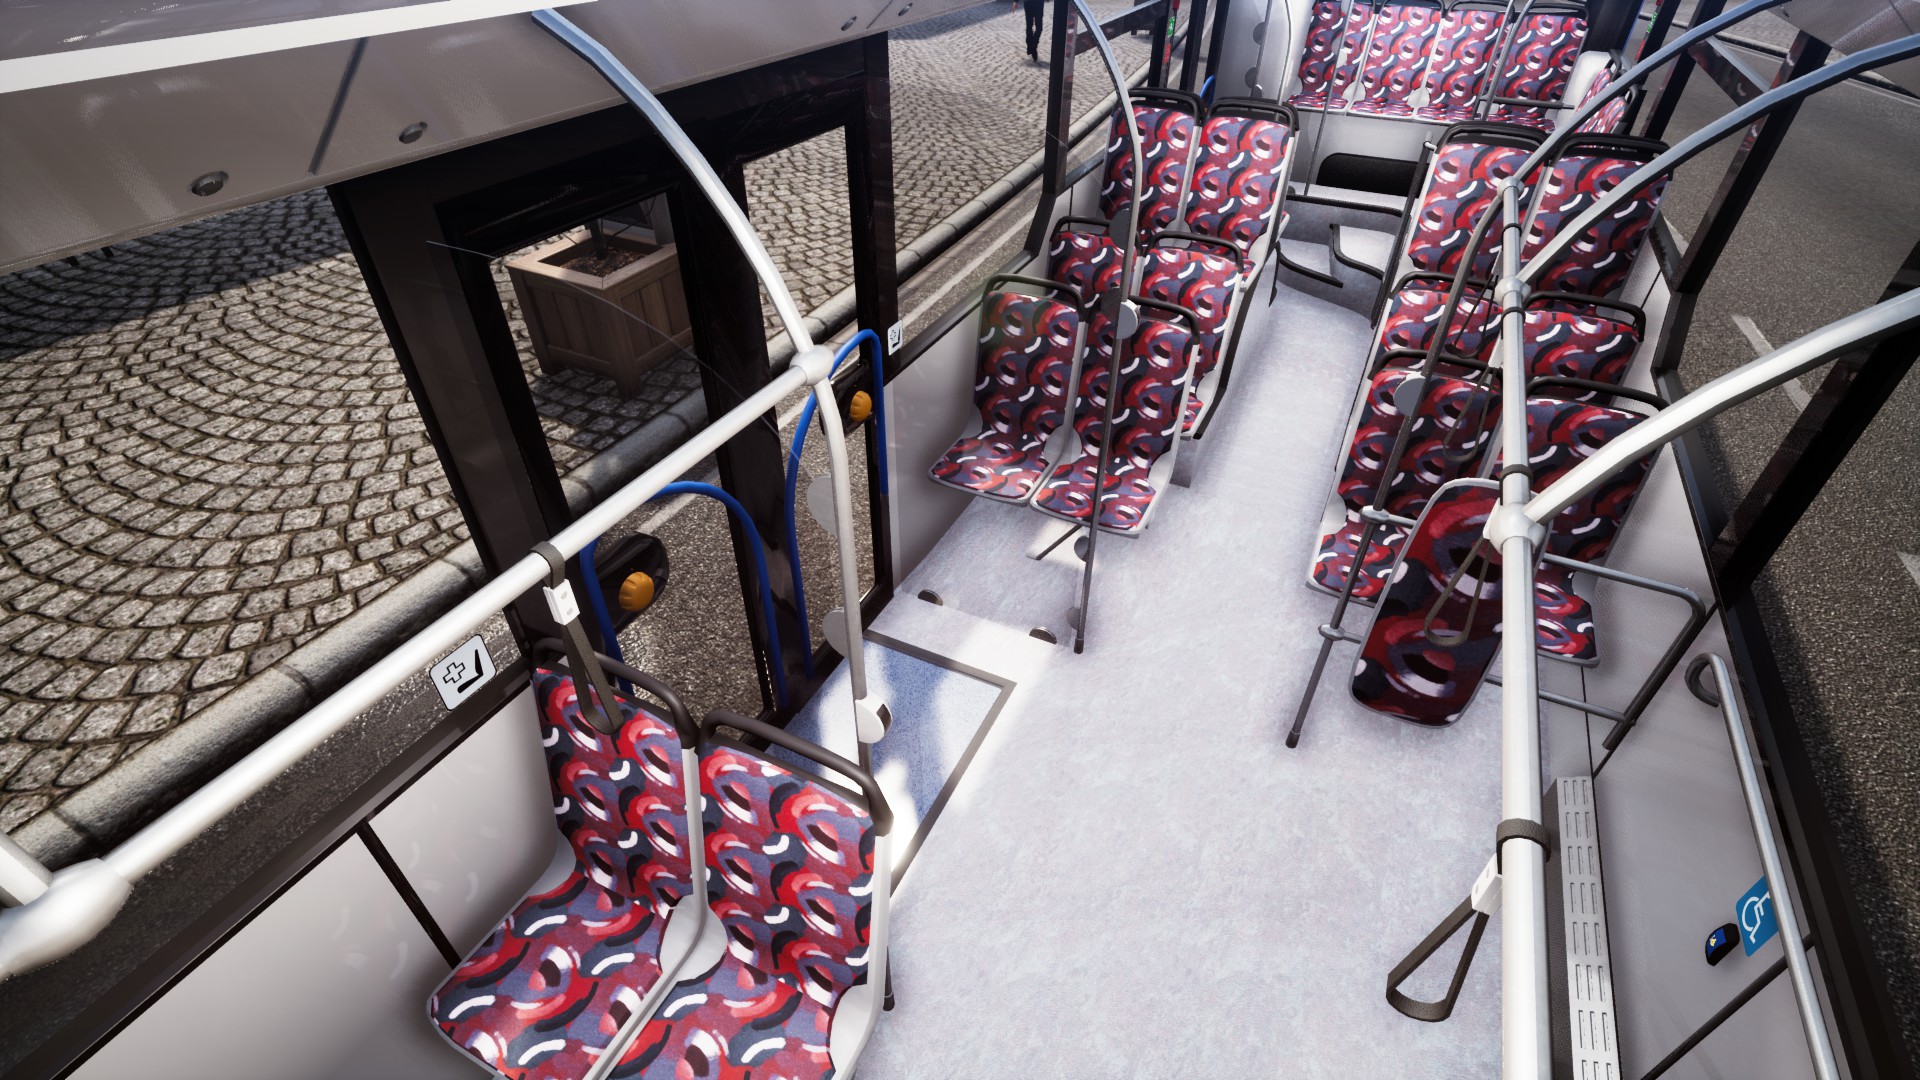 Bus Simulator 18 - MAN Interior Pack 1 DLC Steam CD Key